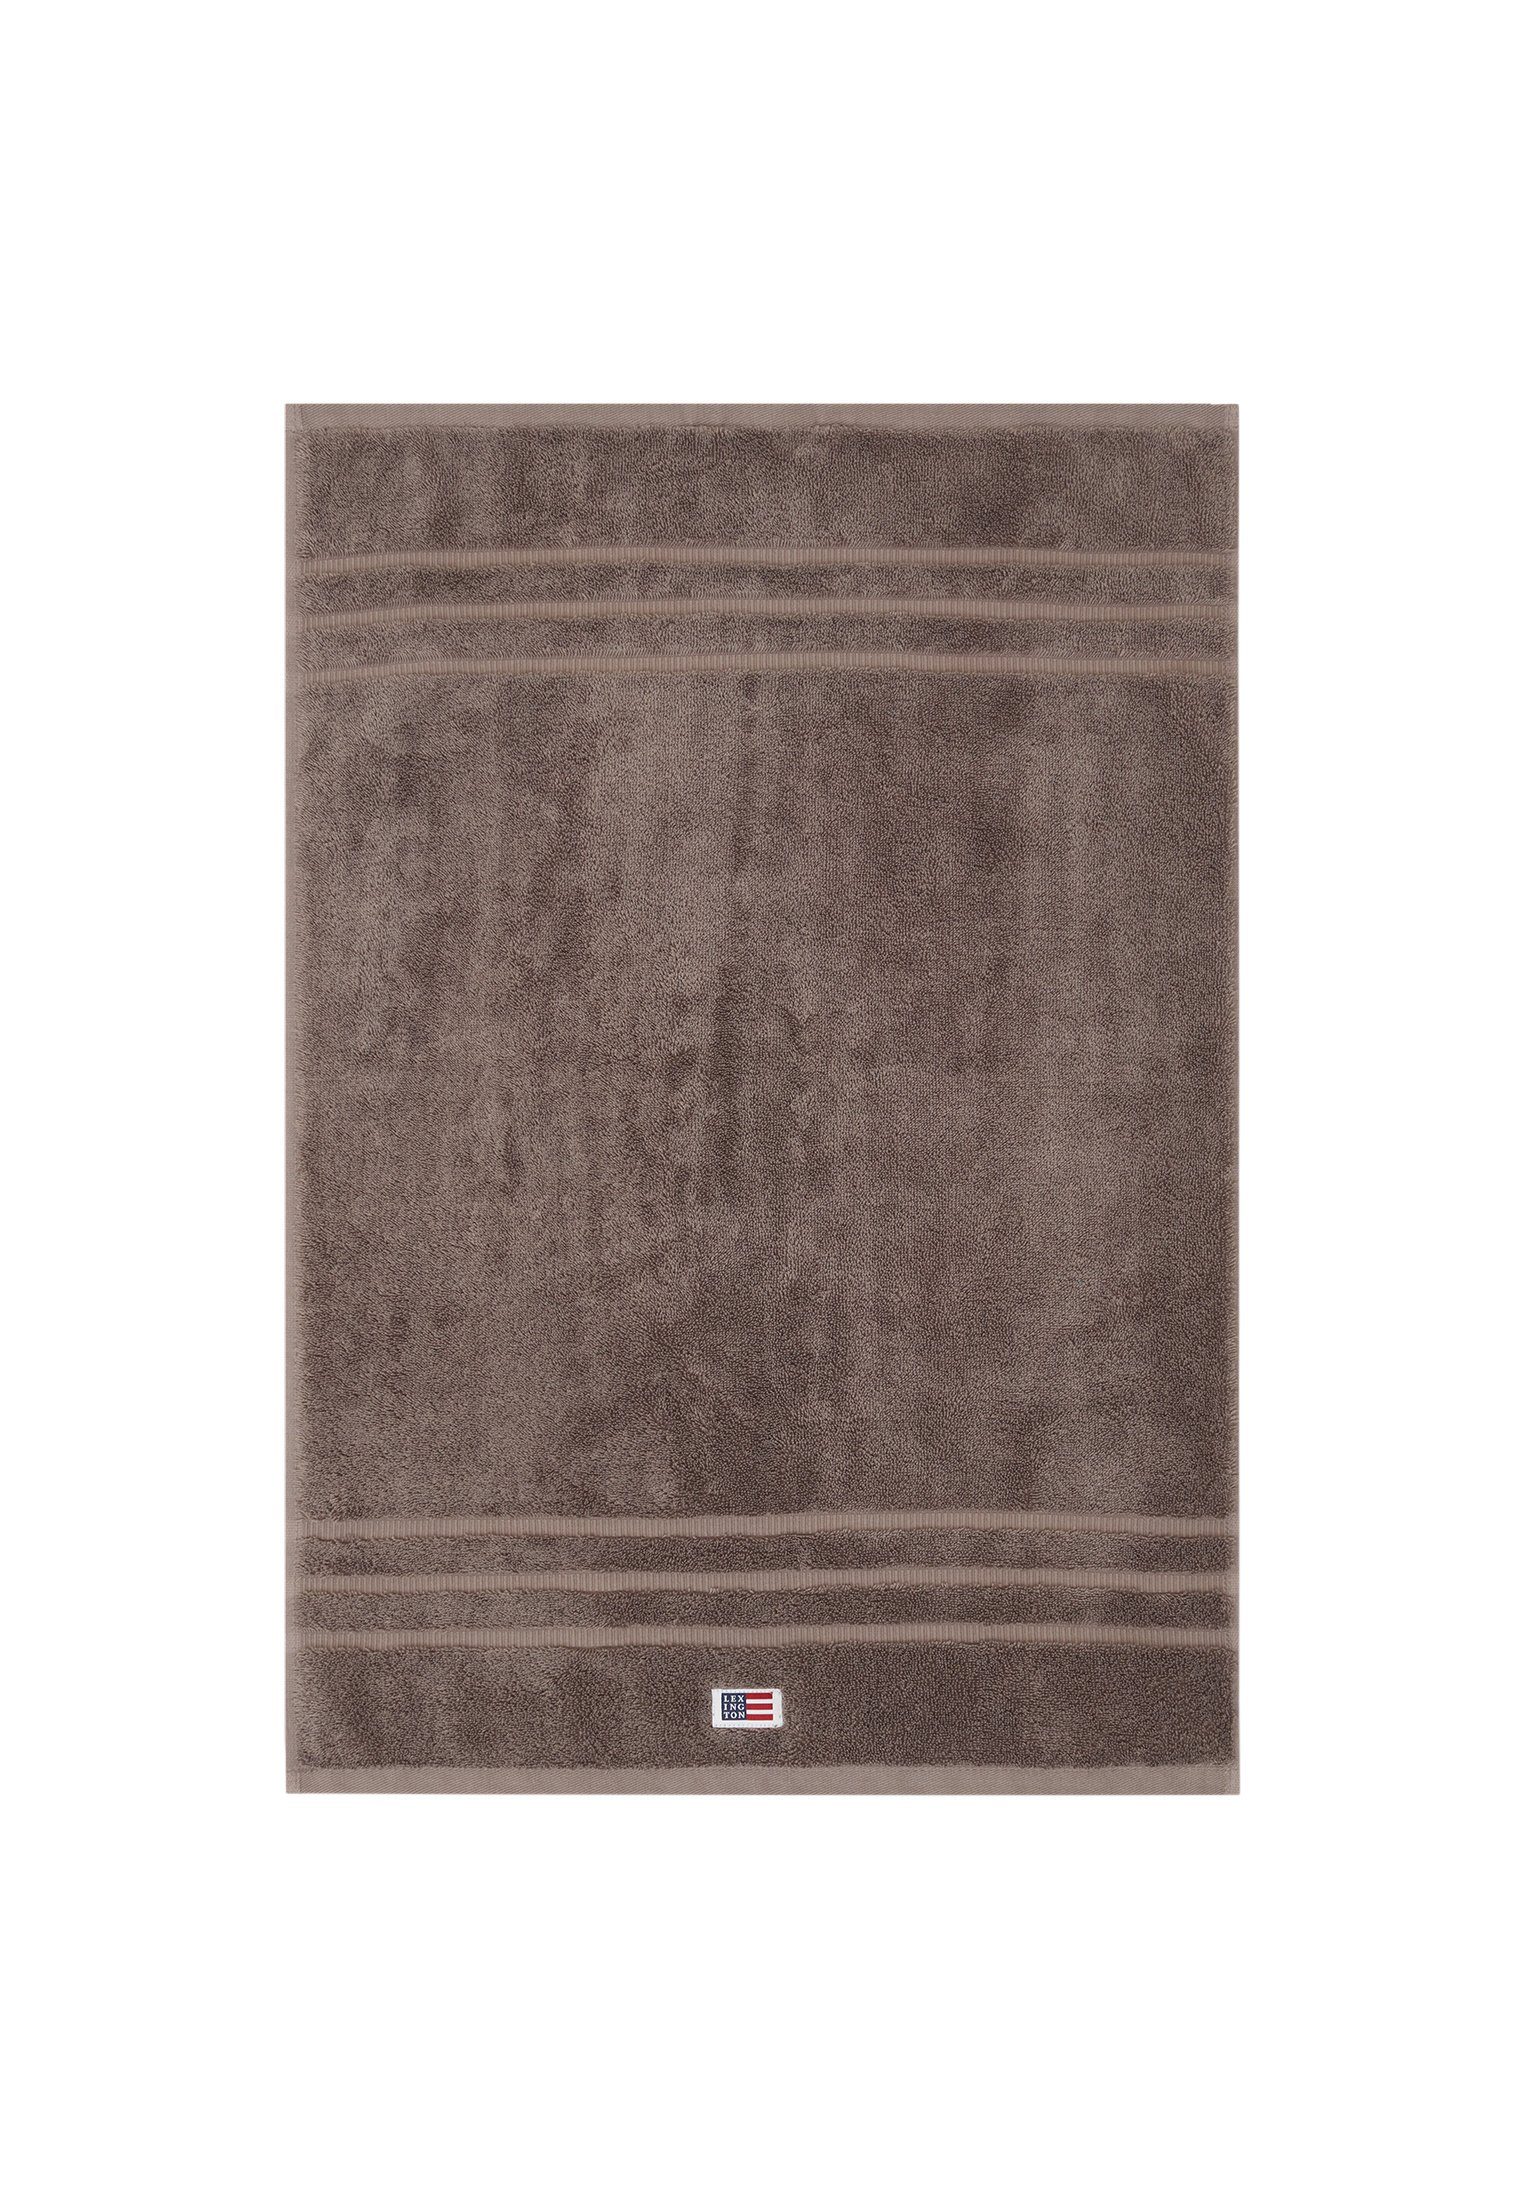 Towel Lexington Handtuch shadow gray Original